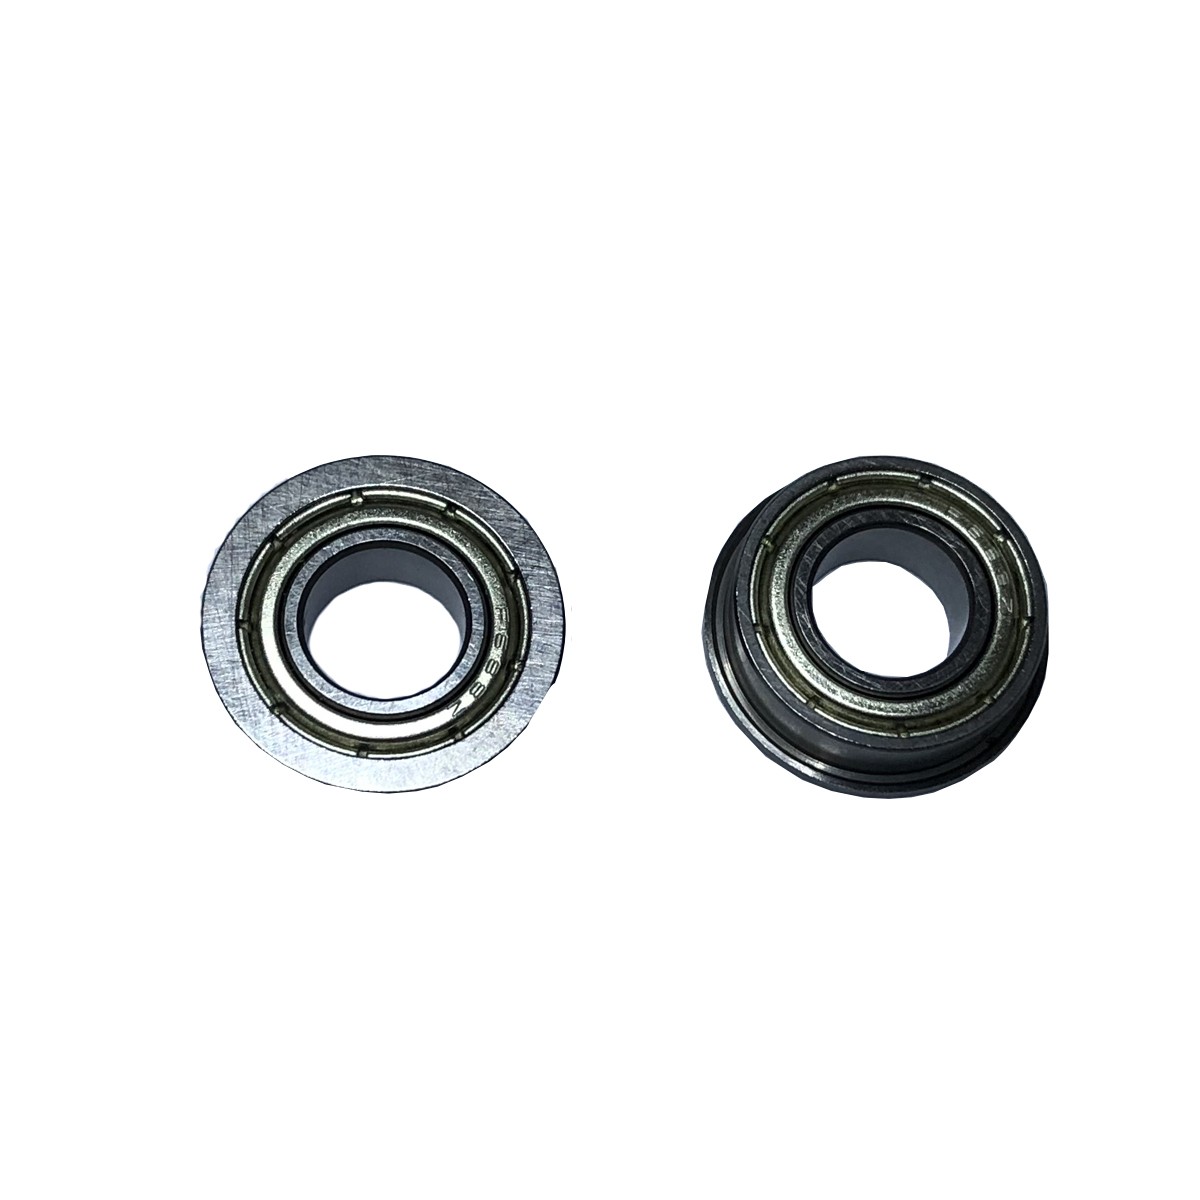 New compatible Platen Roller bearing for TSC TTP-2410M 644M 246M